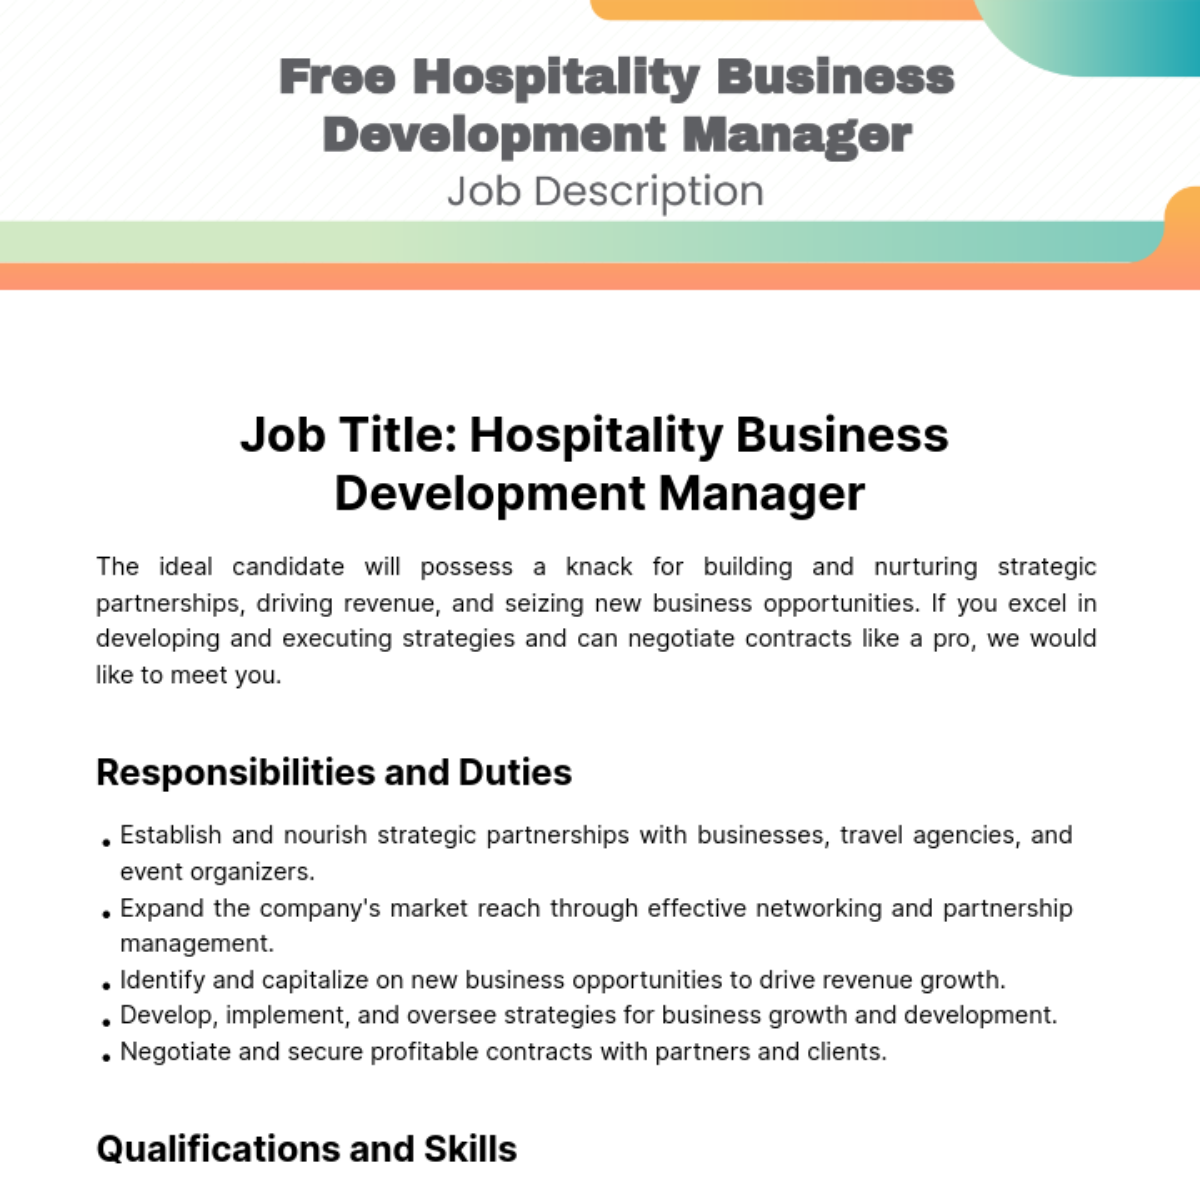 Free Hospitality Business Development Manager Job Description Template